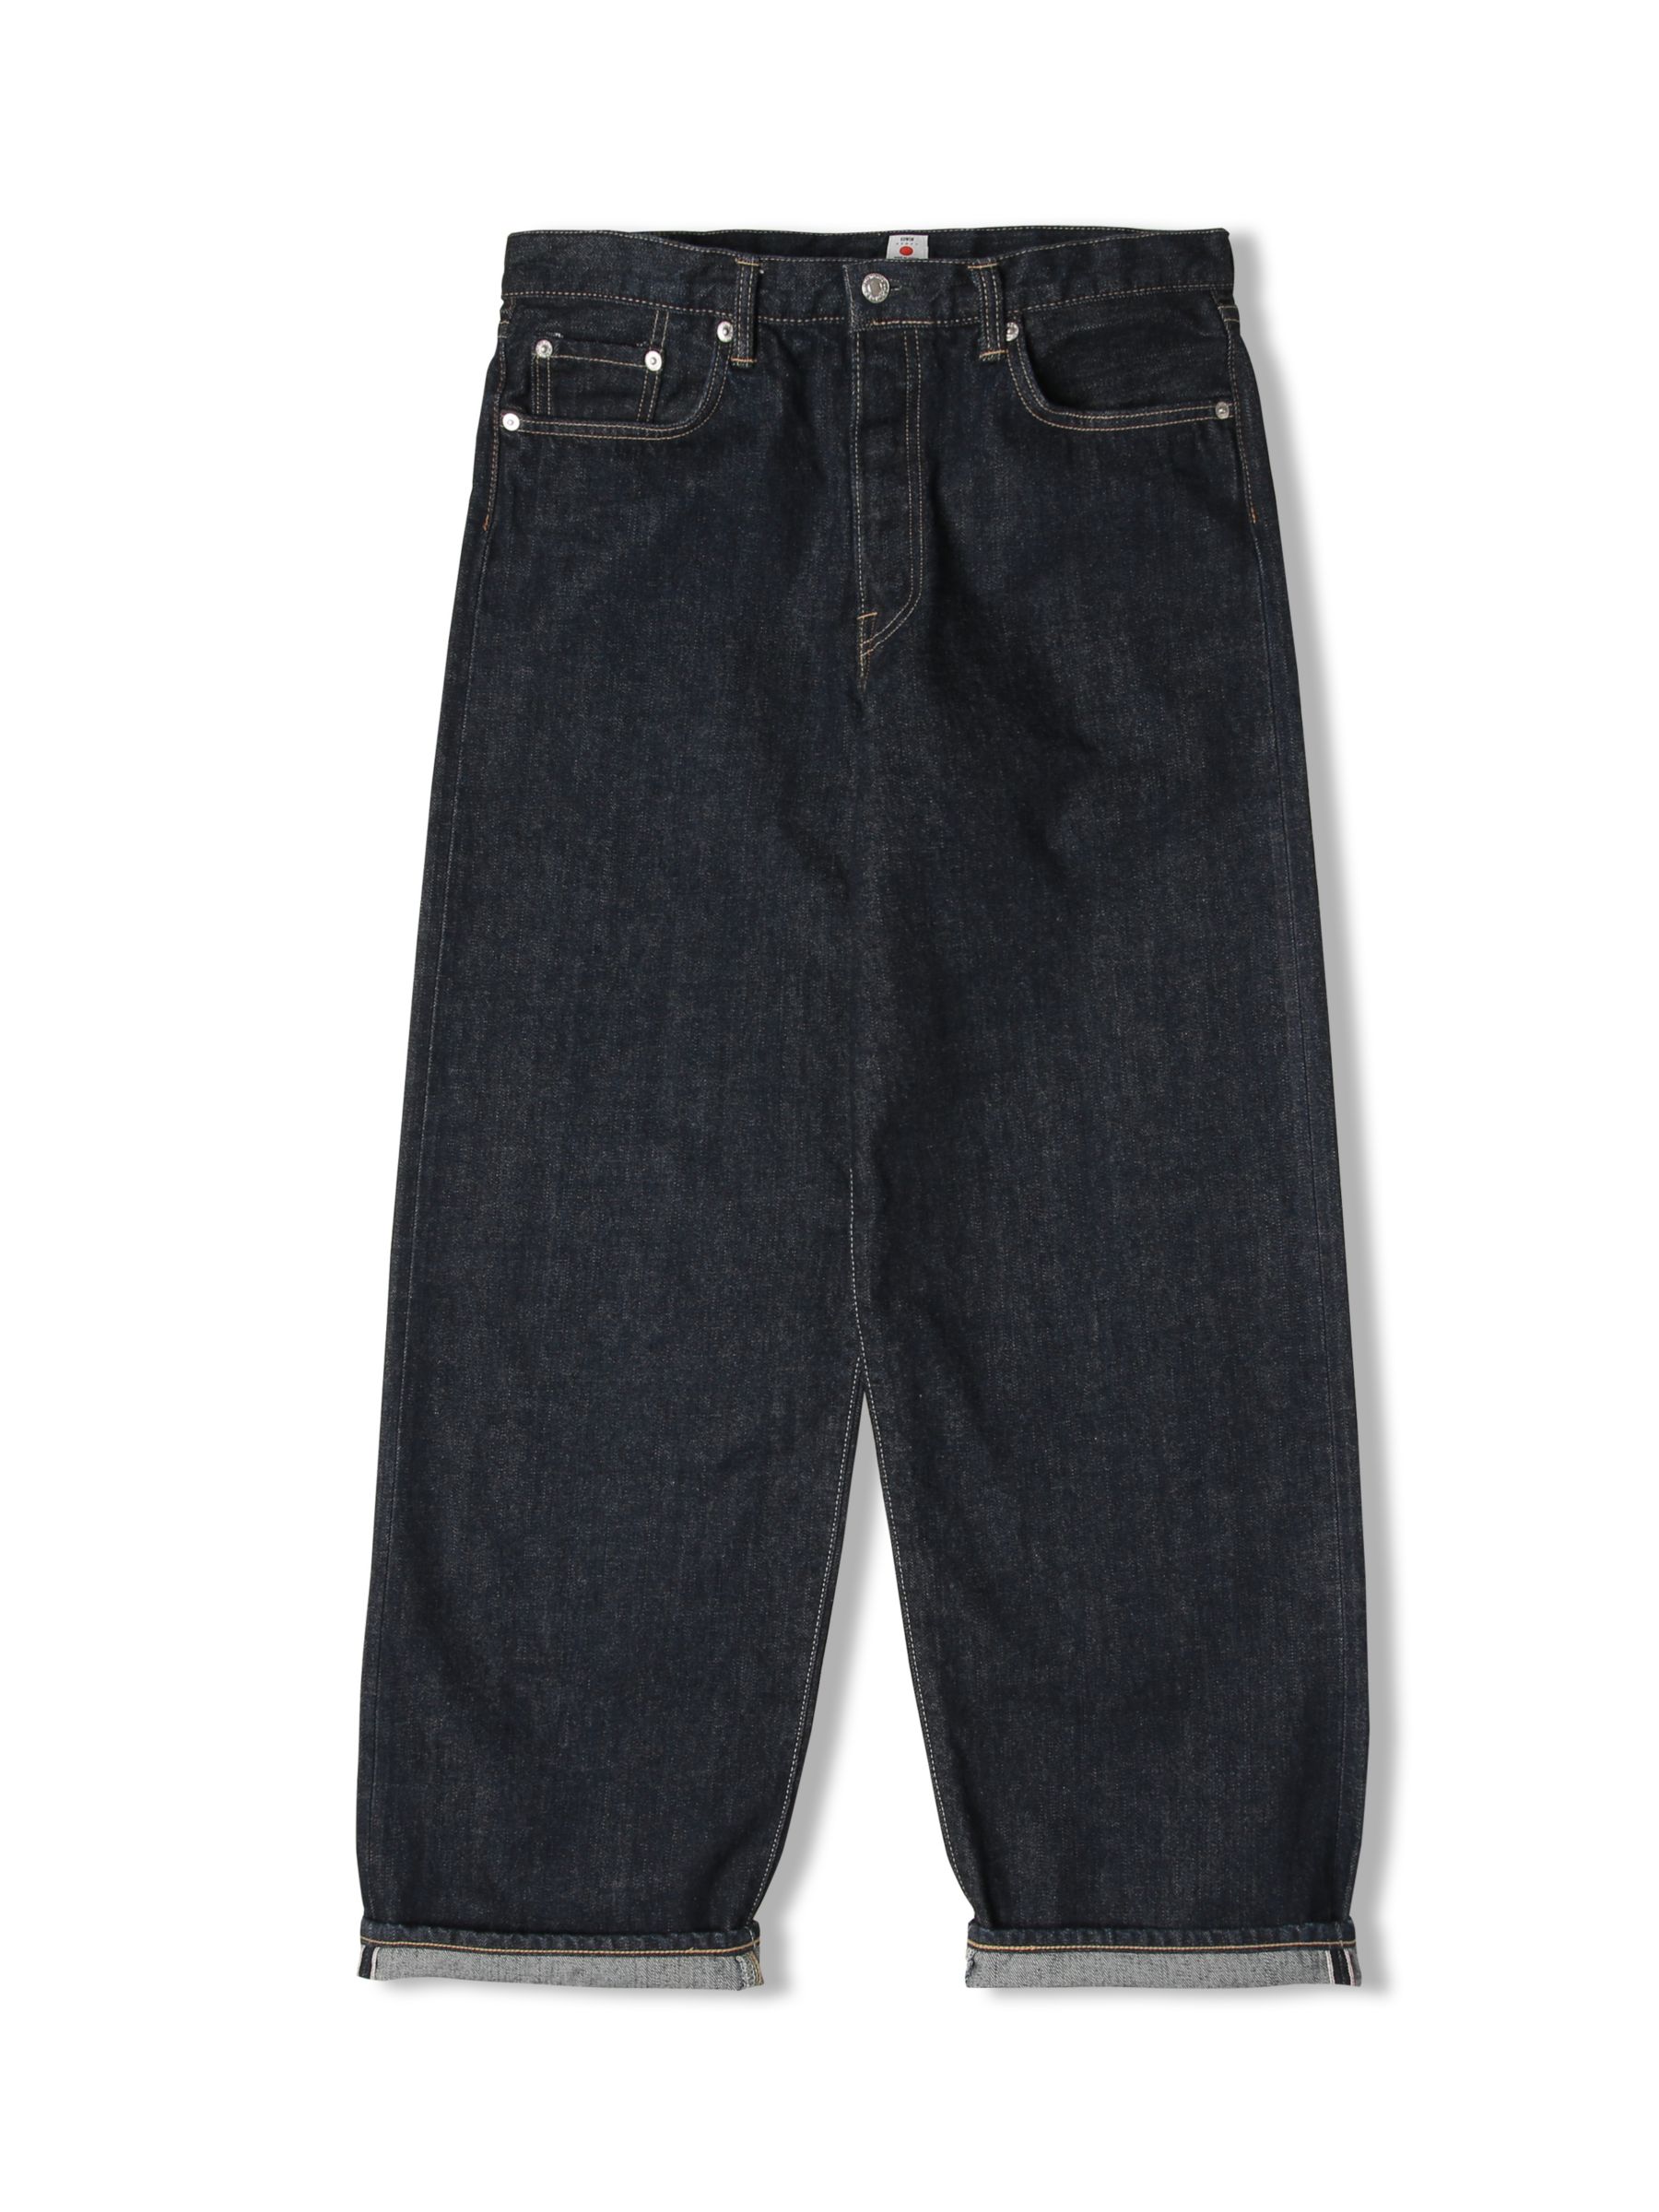 Buy Edwin Wide Leg Jeans, Regular Online at johnlewis.com